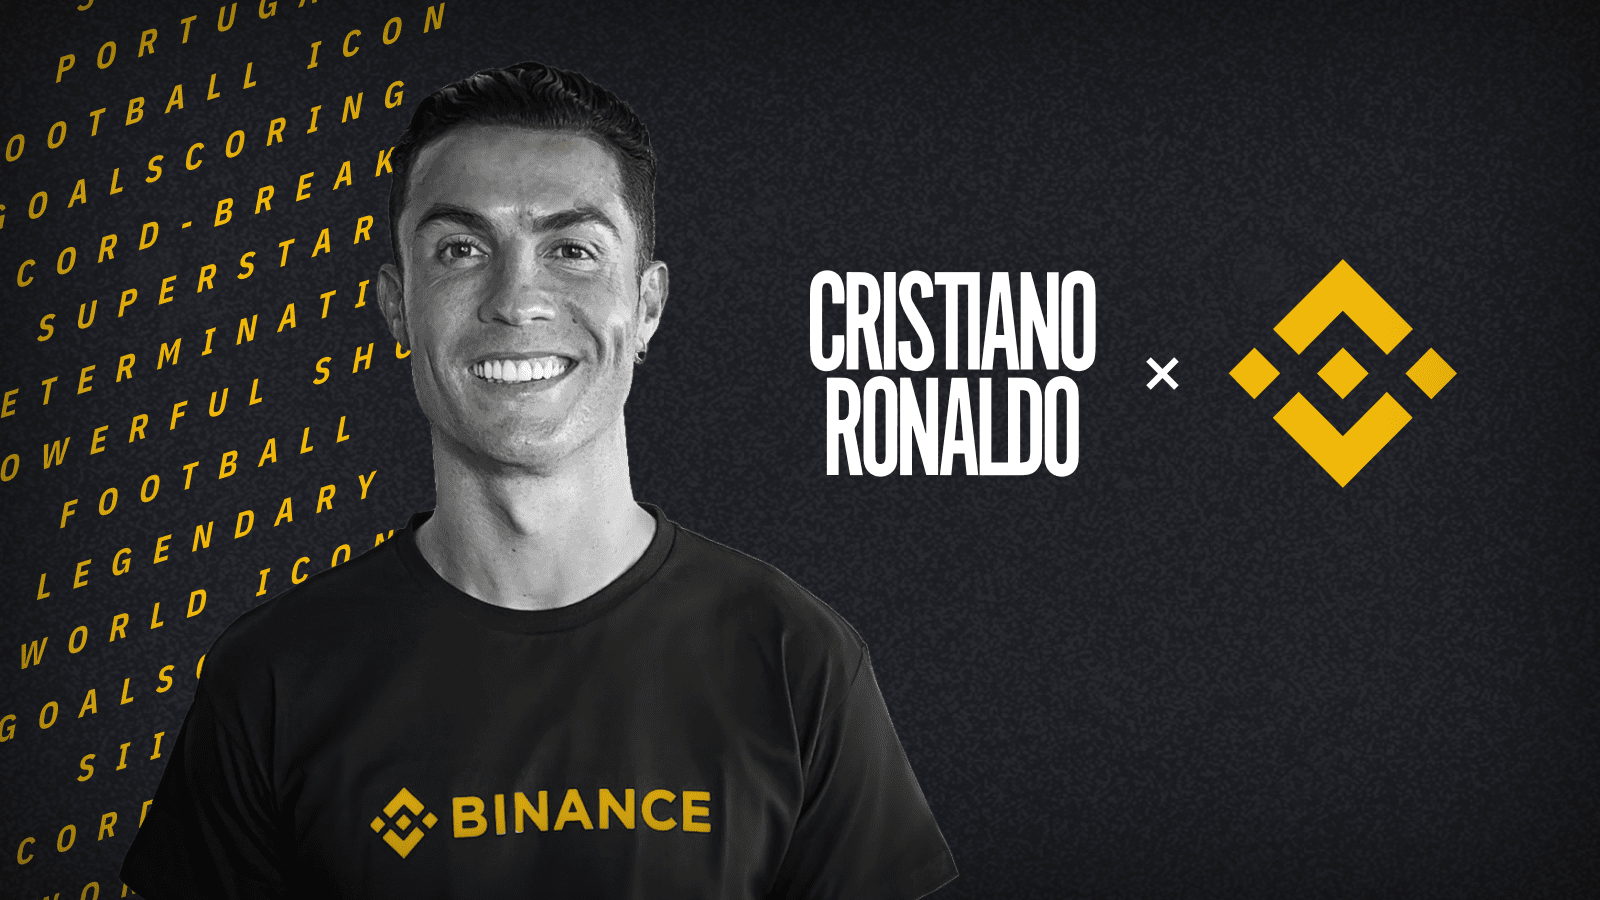 Binance Signs Cristiano Ronaldo for Exclusive Partnership